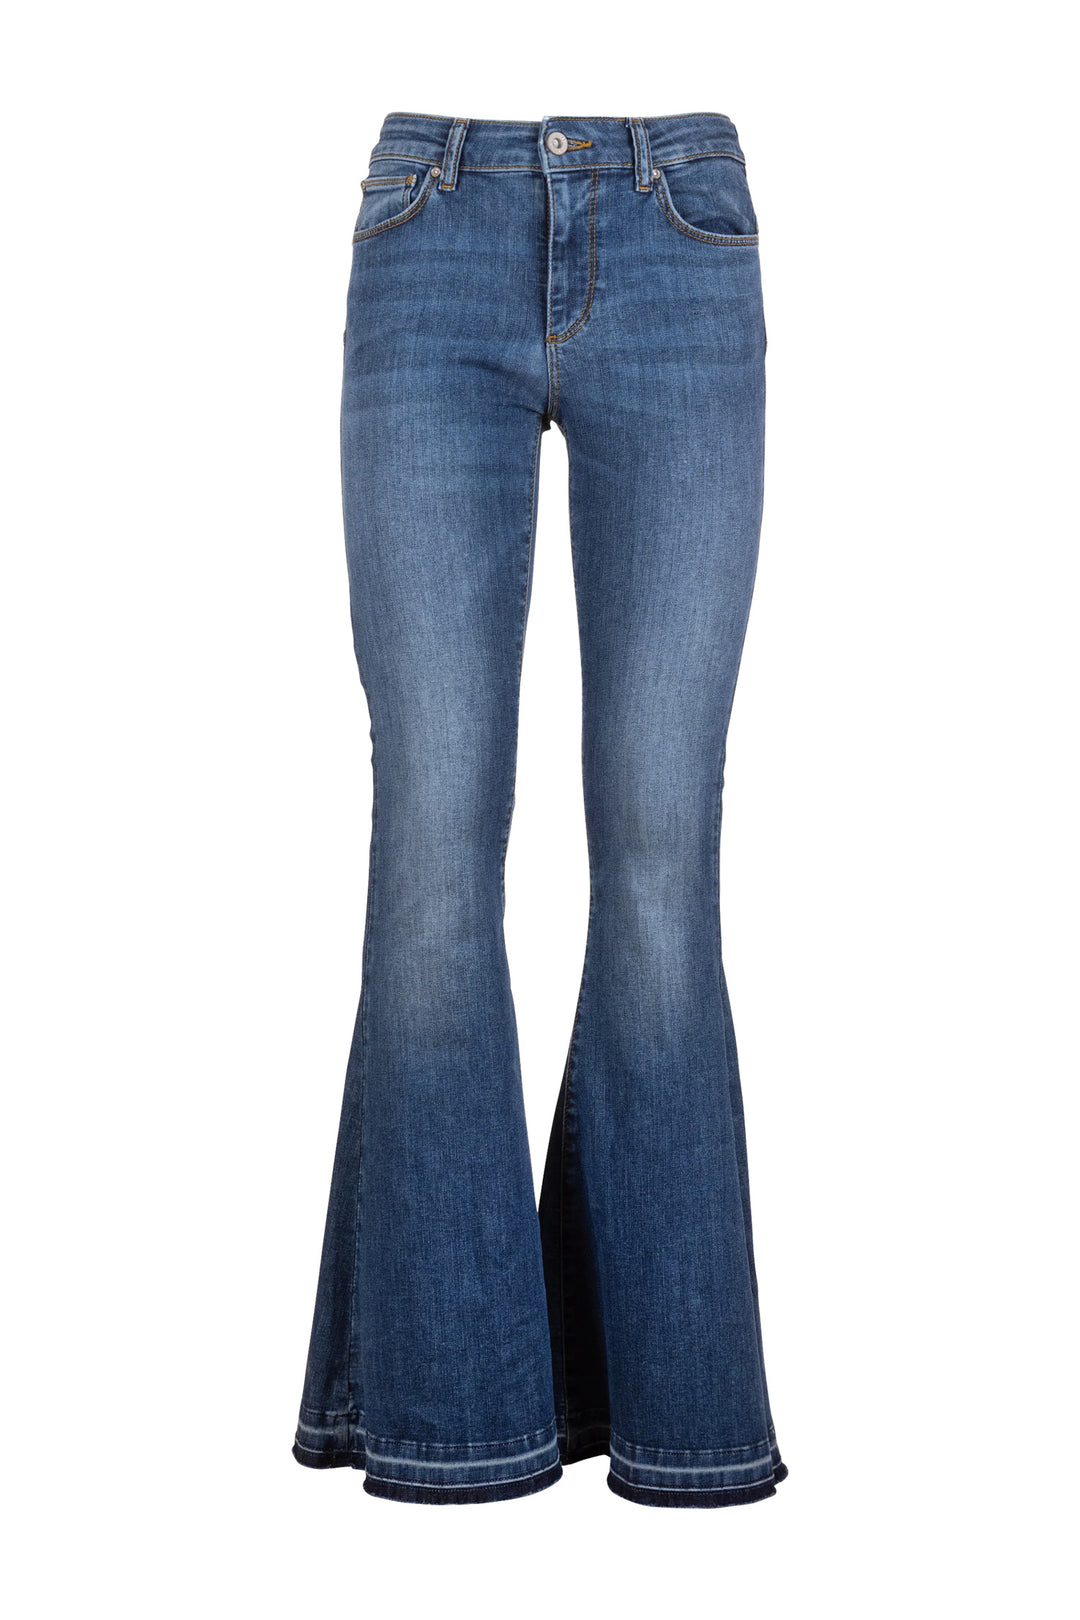 FRACOMINA Jeans bootcut effetto push up in denim lavaggio medio - Mancinelli 1954